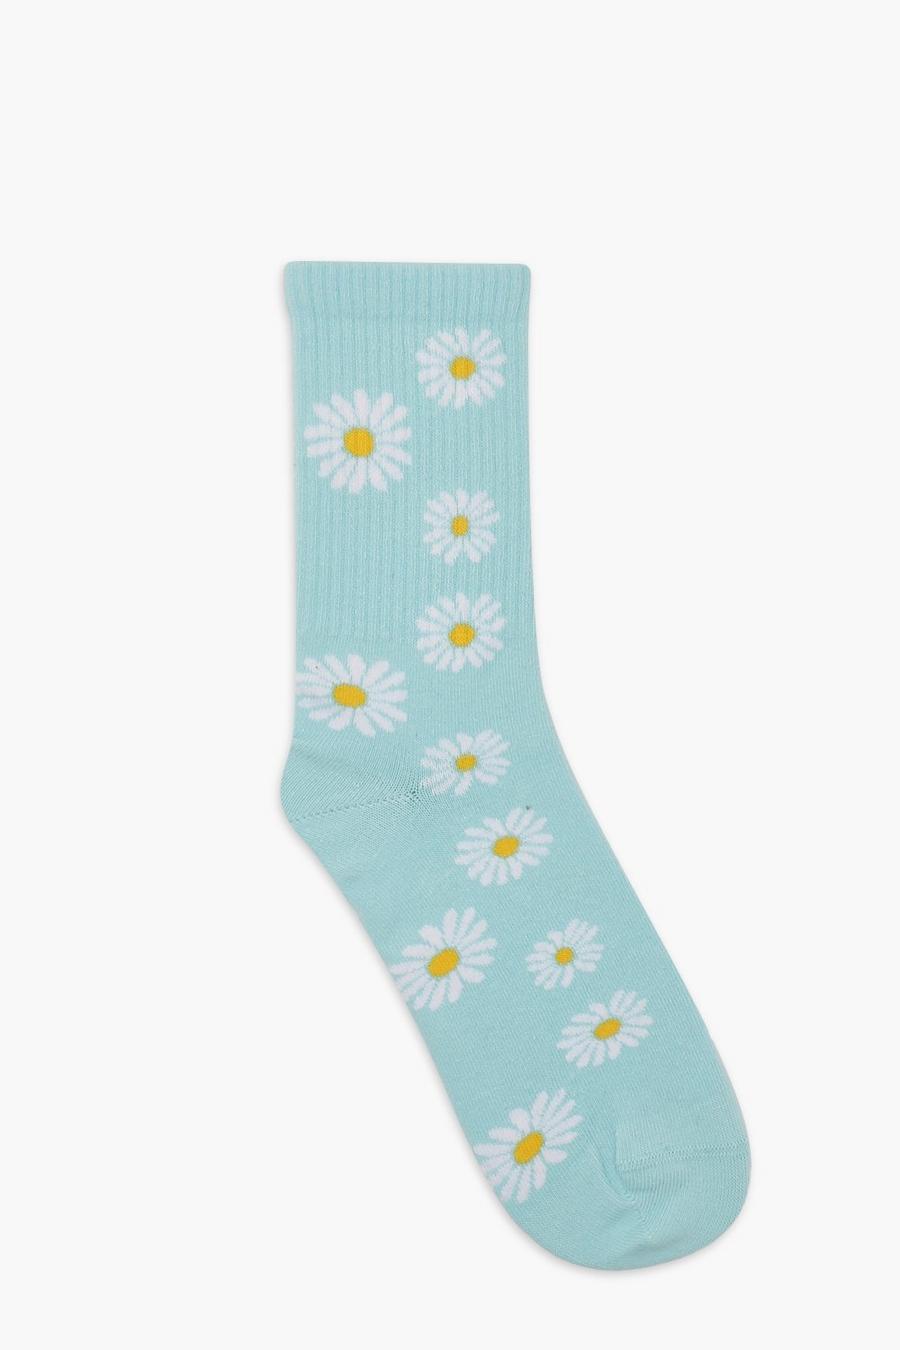 Jacquard Socken mit Gänseblümchen-Print, Blue